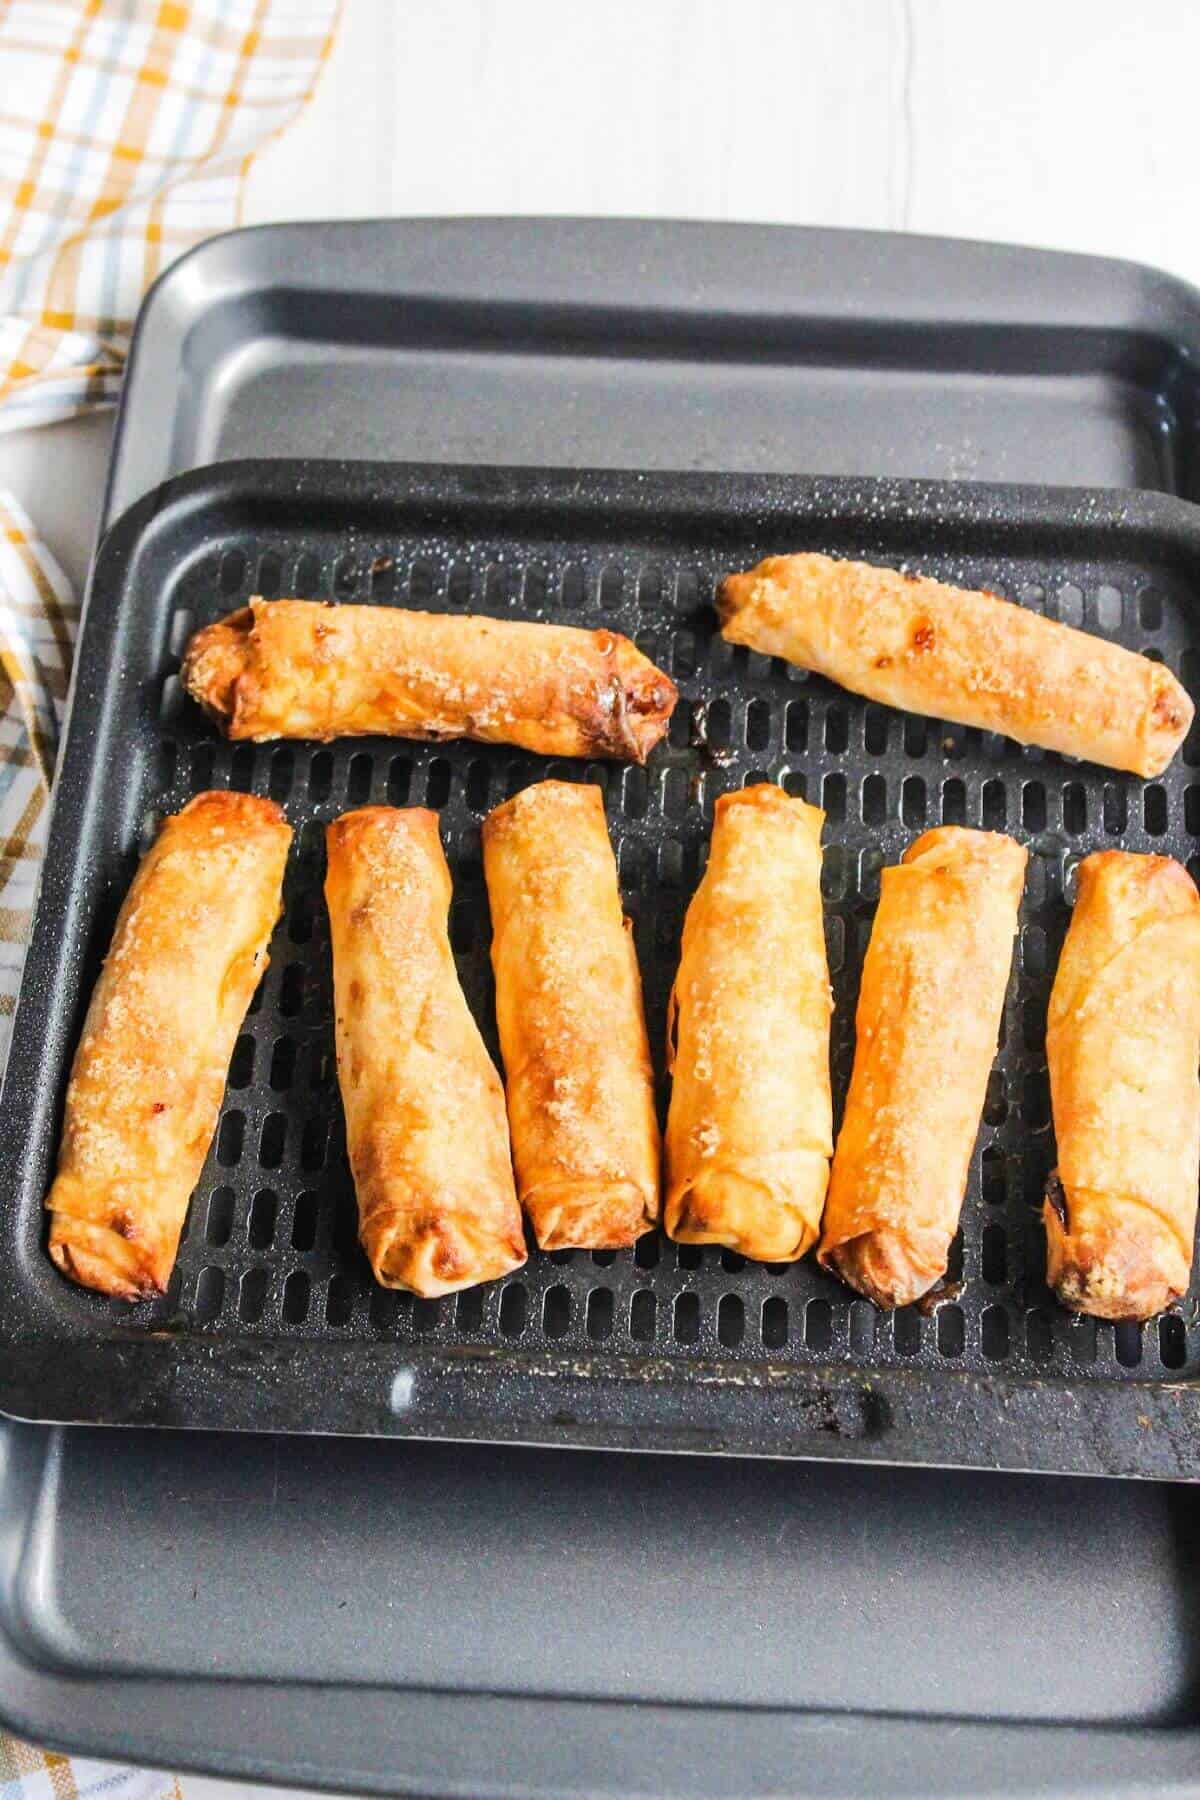 Fried banana turon spring roll rolls on a baking sheet.